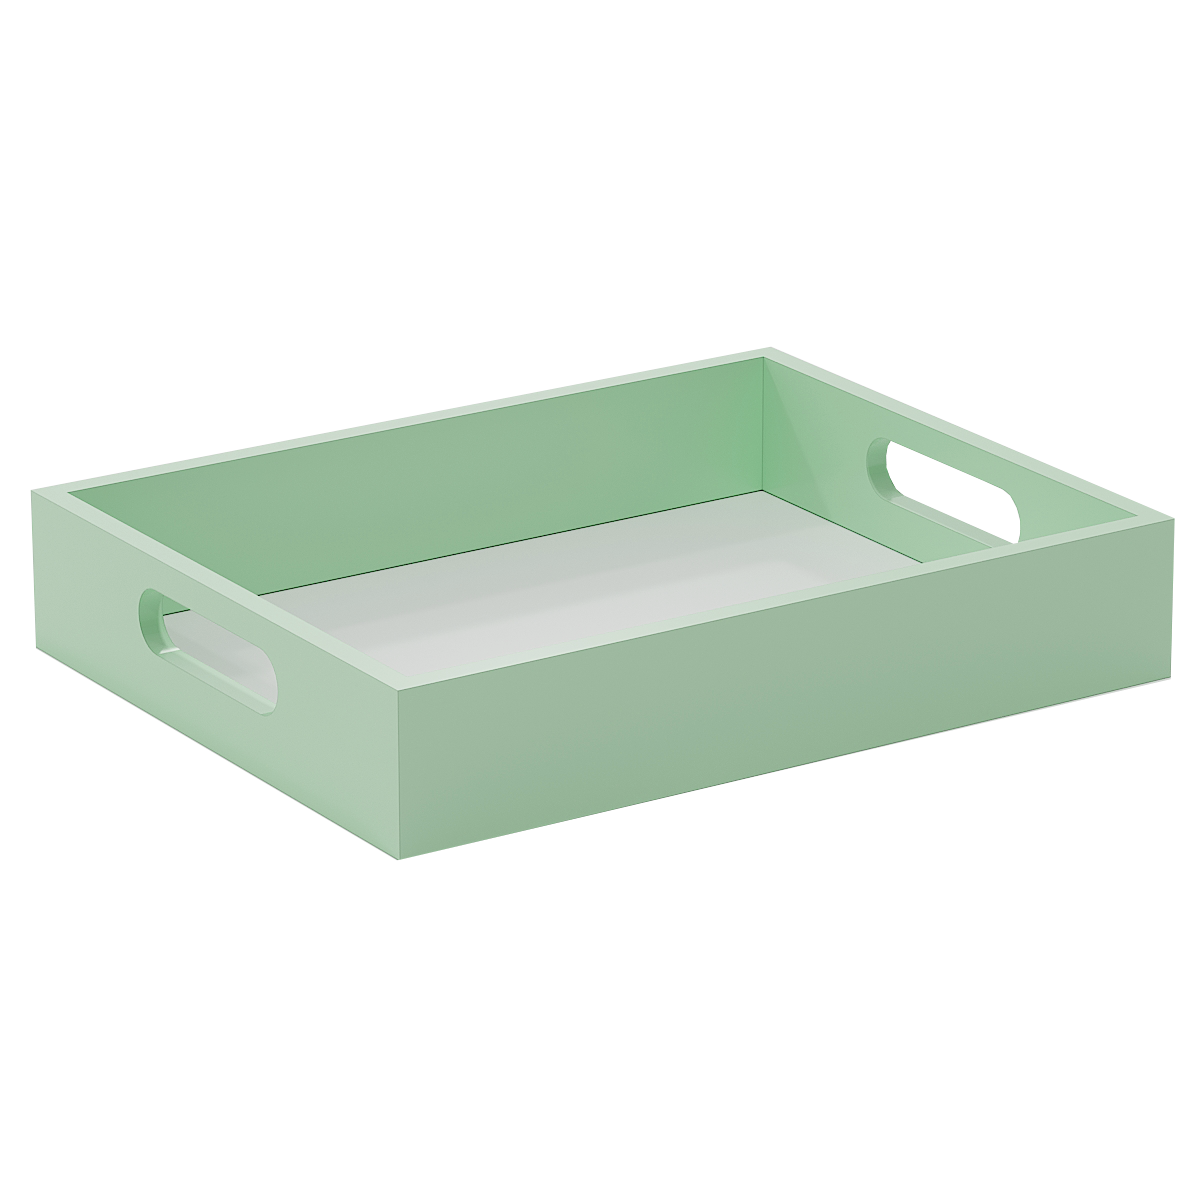 Поднос Дубравия , зеленый/белый, 26х20х5 см, МДФ, KD-027-126